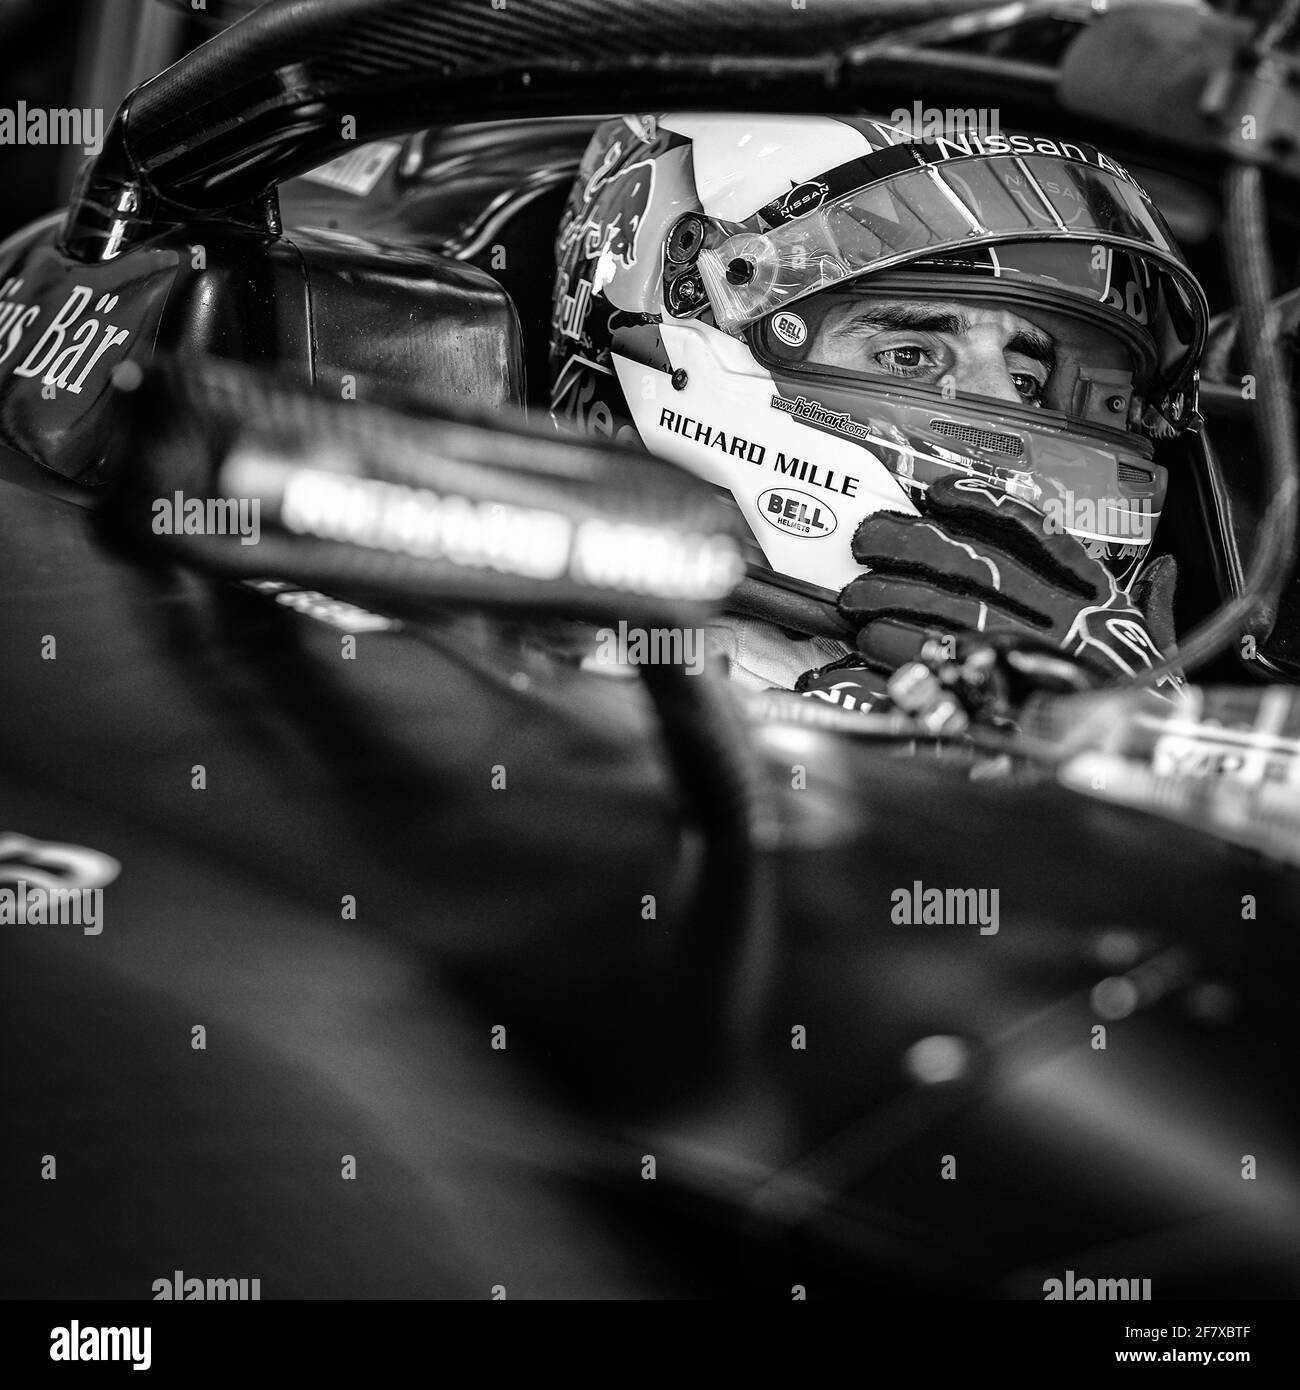 BUEMI Sebastien (SWI), Nissan e.Dams, Nissan IM02, Portrait während des Rome ePrix 2021, 3. Lauf der Formel-E-Weltmeisterschaft 2020-21, auf dem Circuito Cittadino dell'EUR vom 9. Bis 11. April in Rom, Italien - Foto Francois Flamand / DPPI / LiveMedia Stockfoto